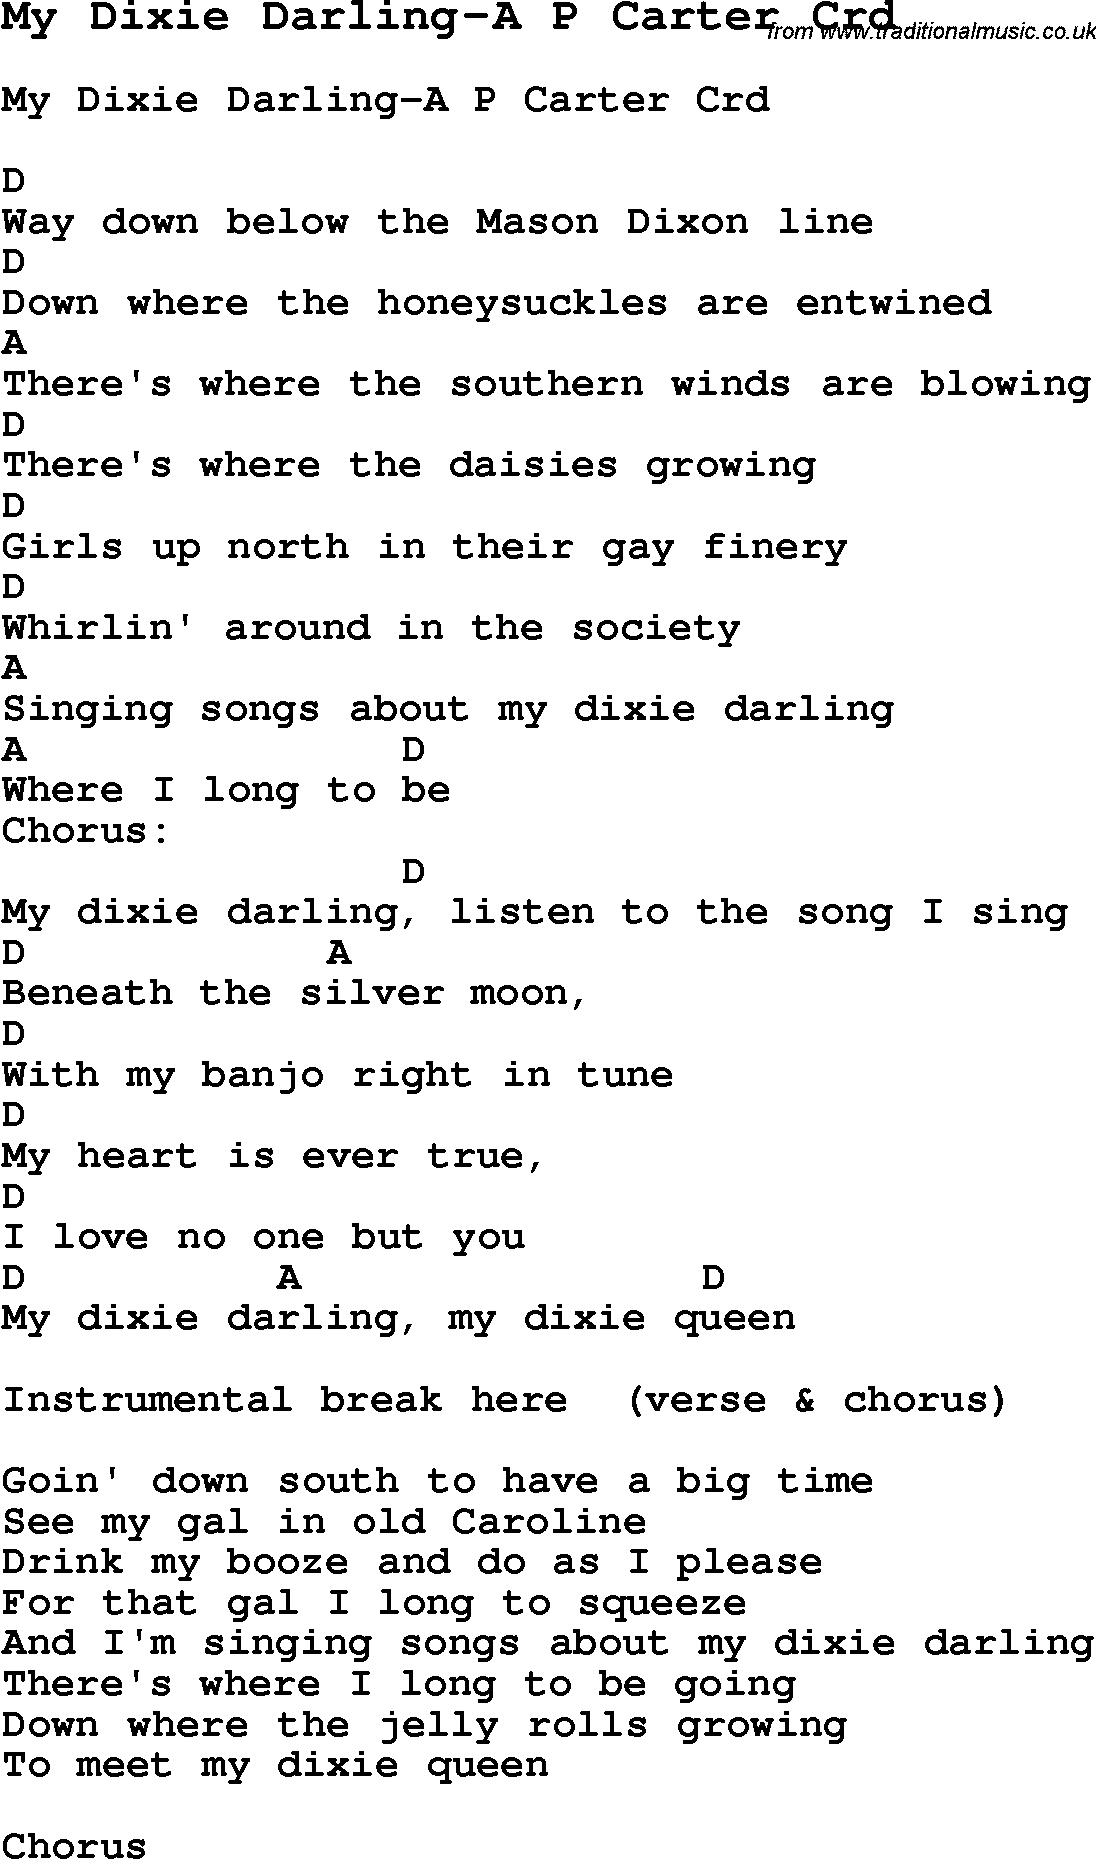 Skiffle Song Lyrics for My Dixie Darling-A P Carter with chords for Mandolin, Ukulele, Guitar, Banjo etc.